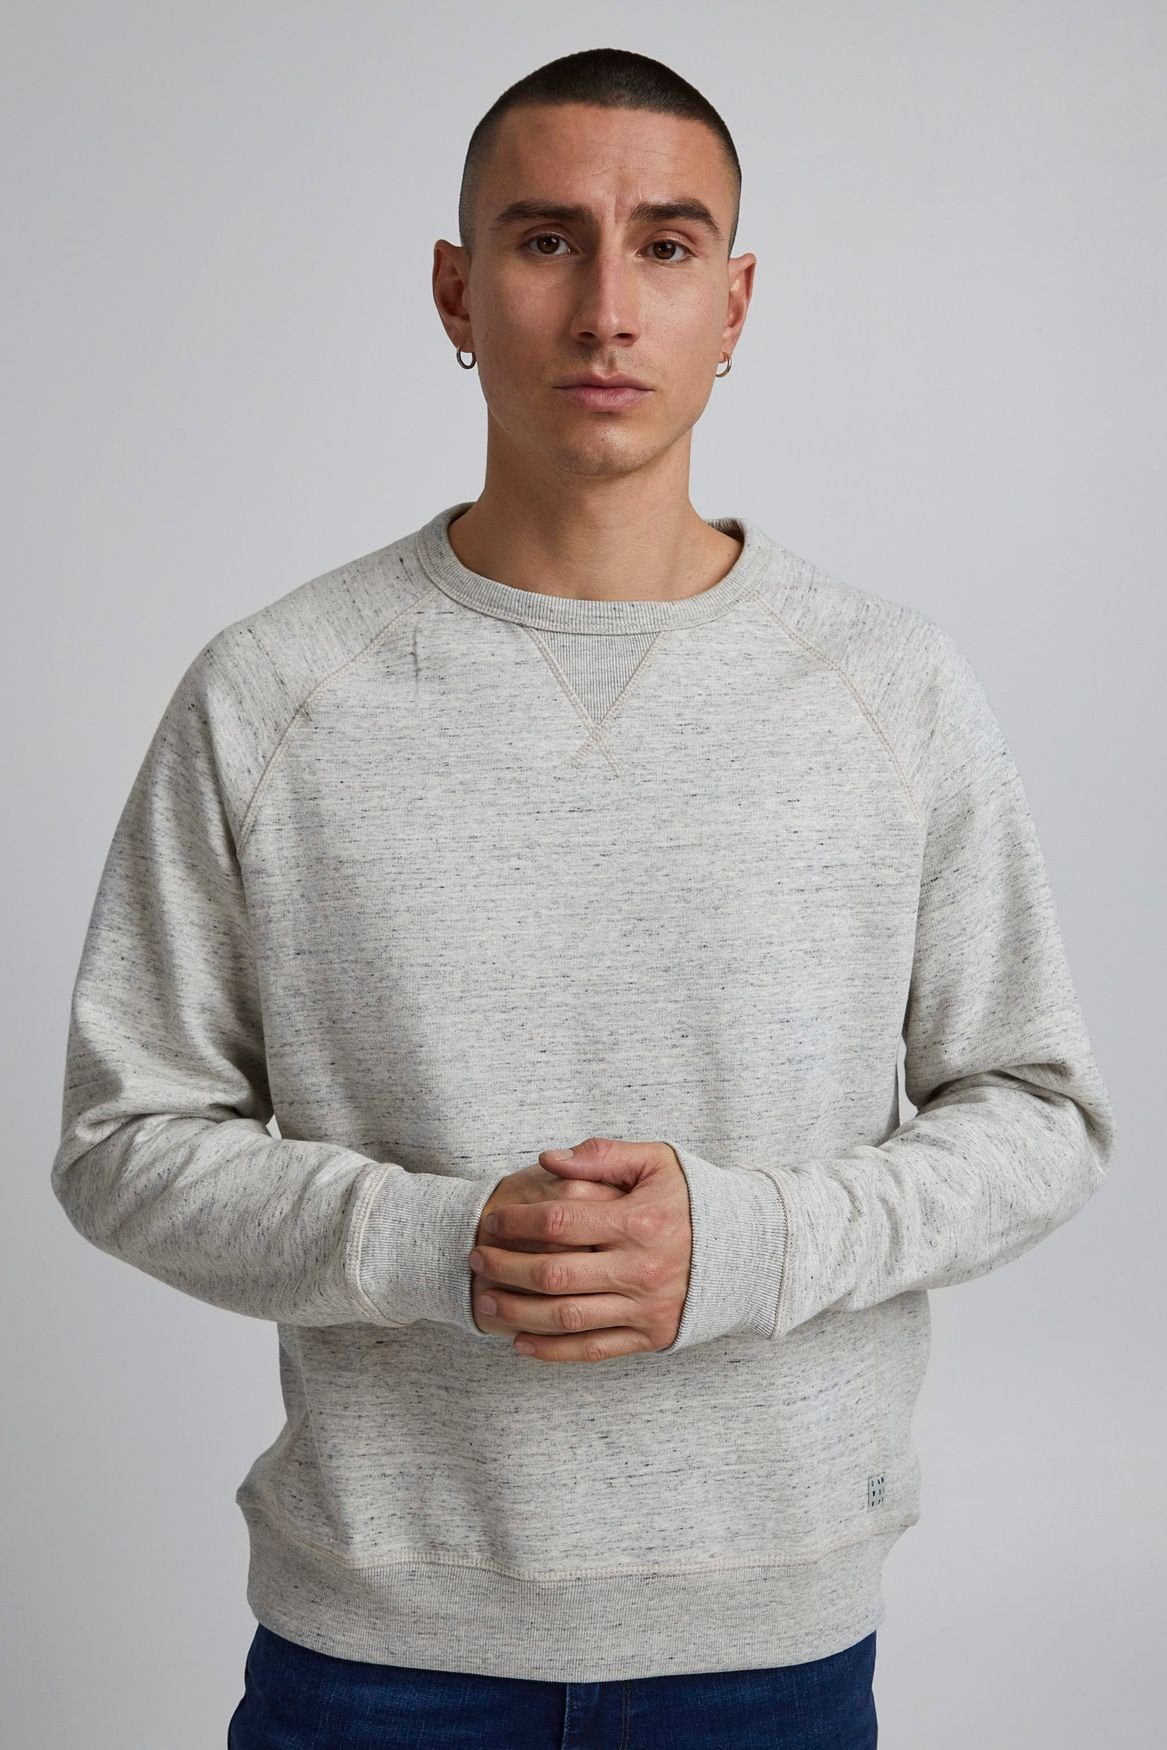 BHNEMO, - Modell in SWEATSHIRT Aktuelles Sweatshirt 20706979 Blend Grau